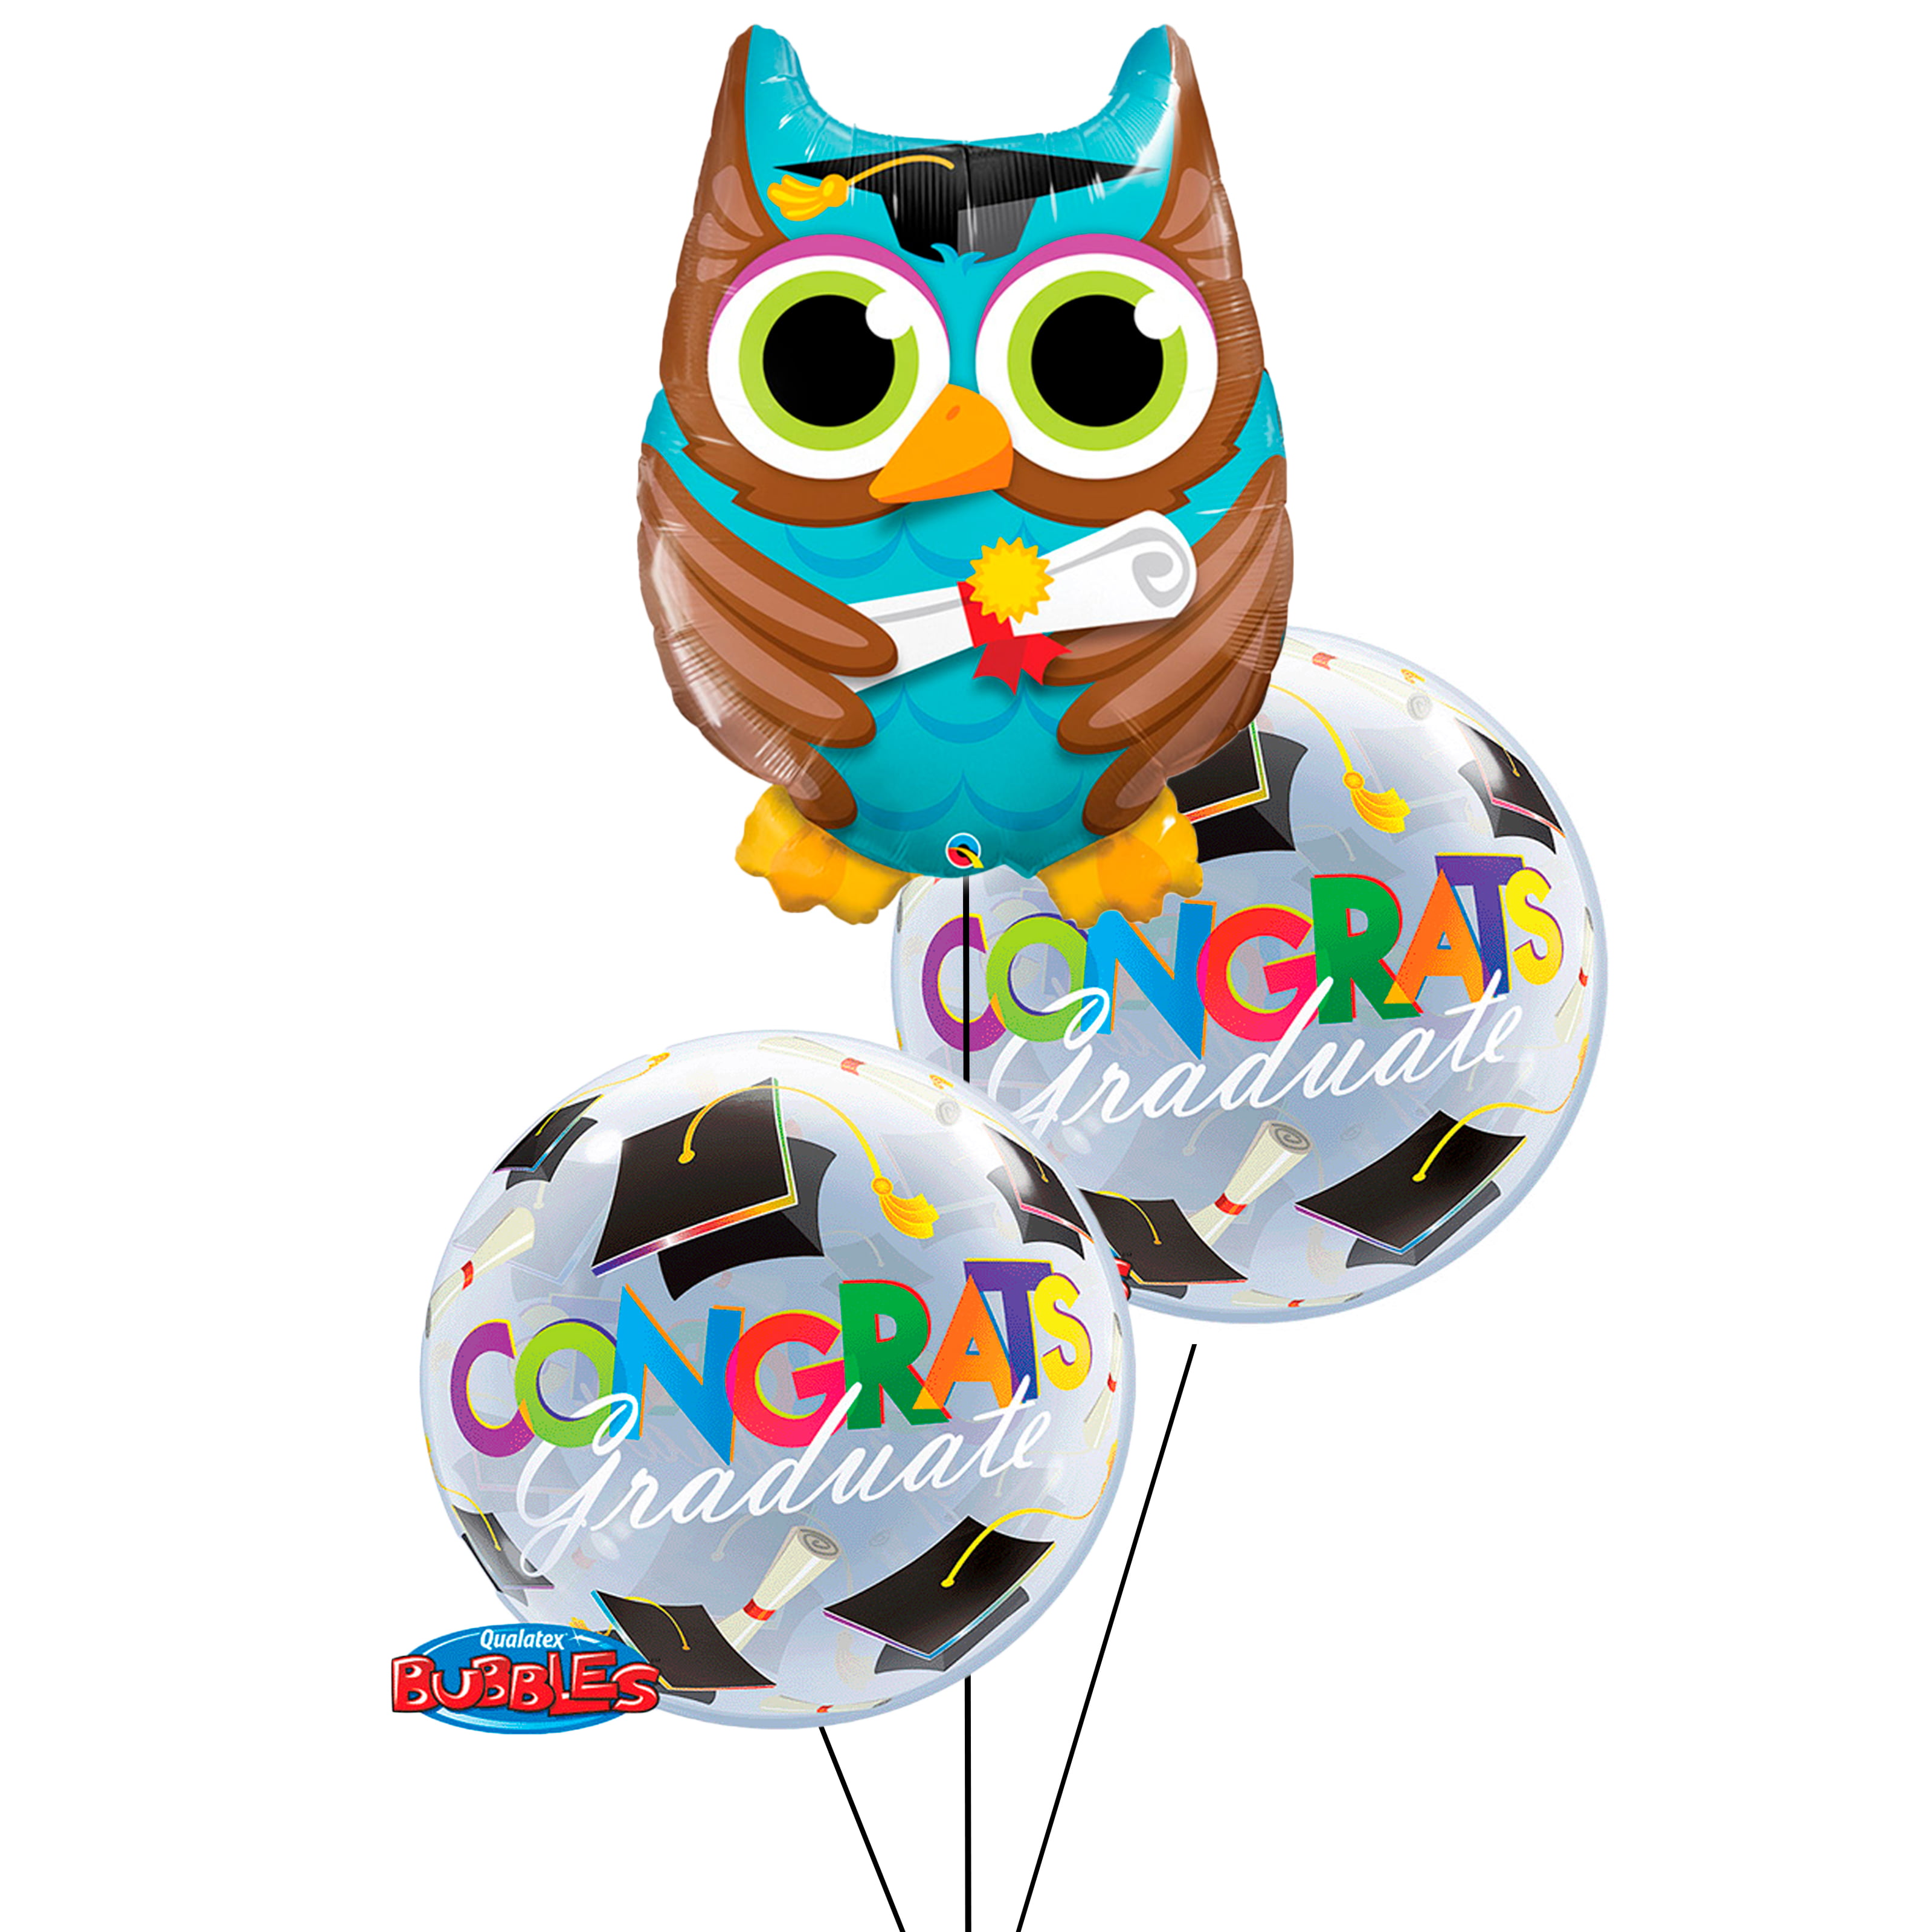 BRIGHT POLKA DOT OWL HAPPY BIRTHDAY BANNER ~ Birthday Party Supplies Decorations